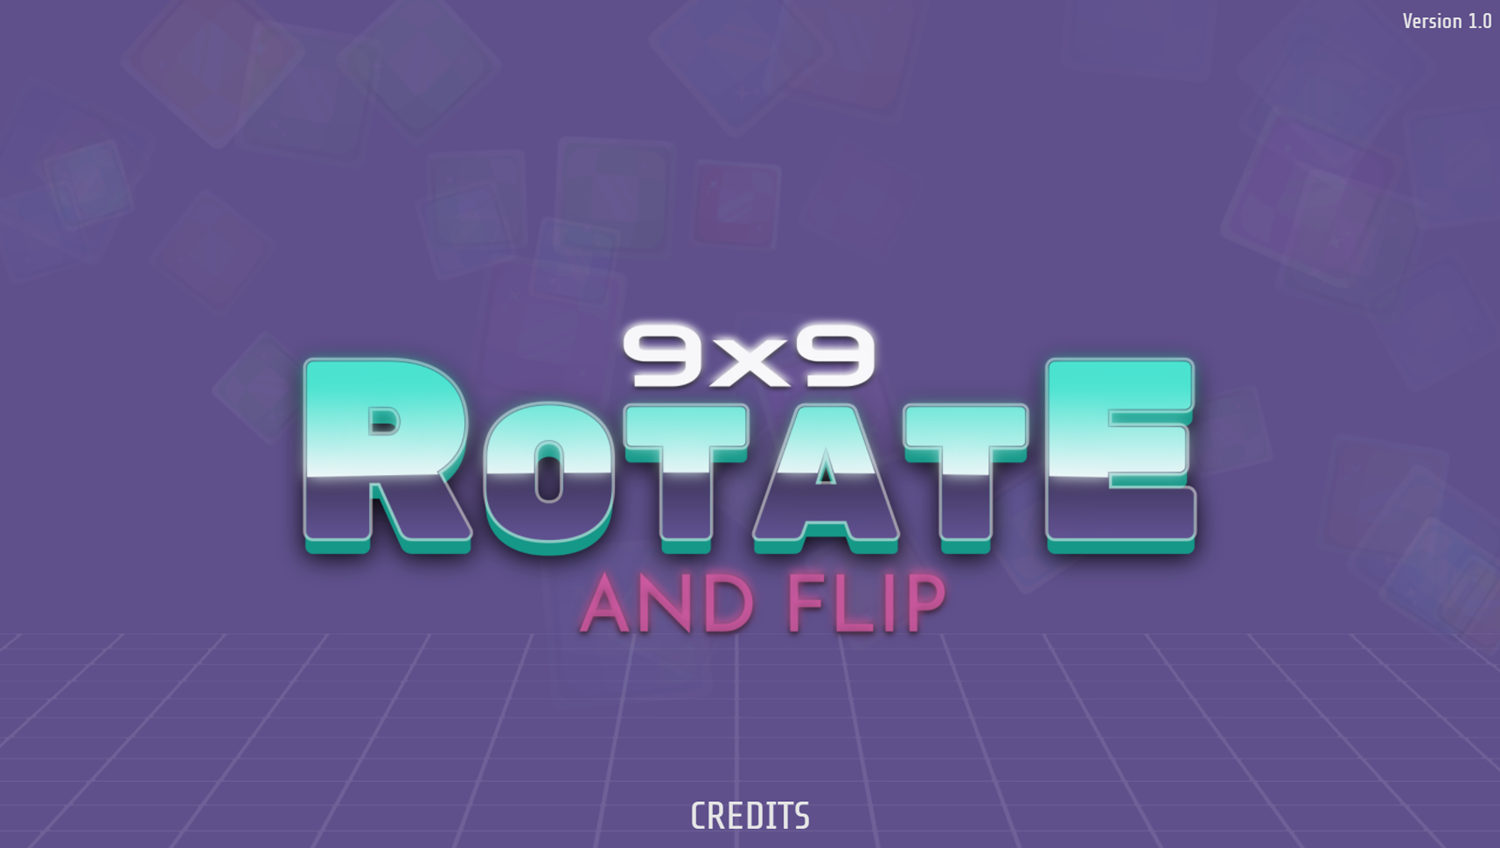 9x9 Rotate and Flip Game Welcome Screen Screenshot.